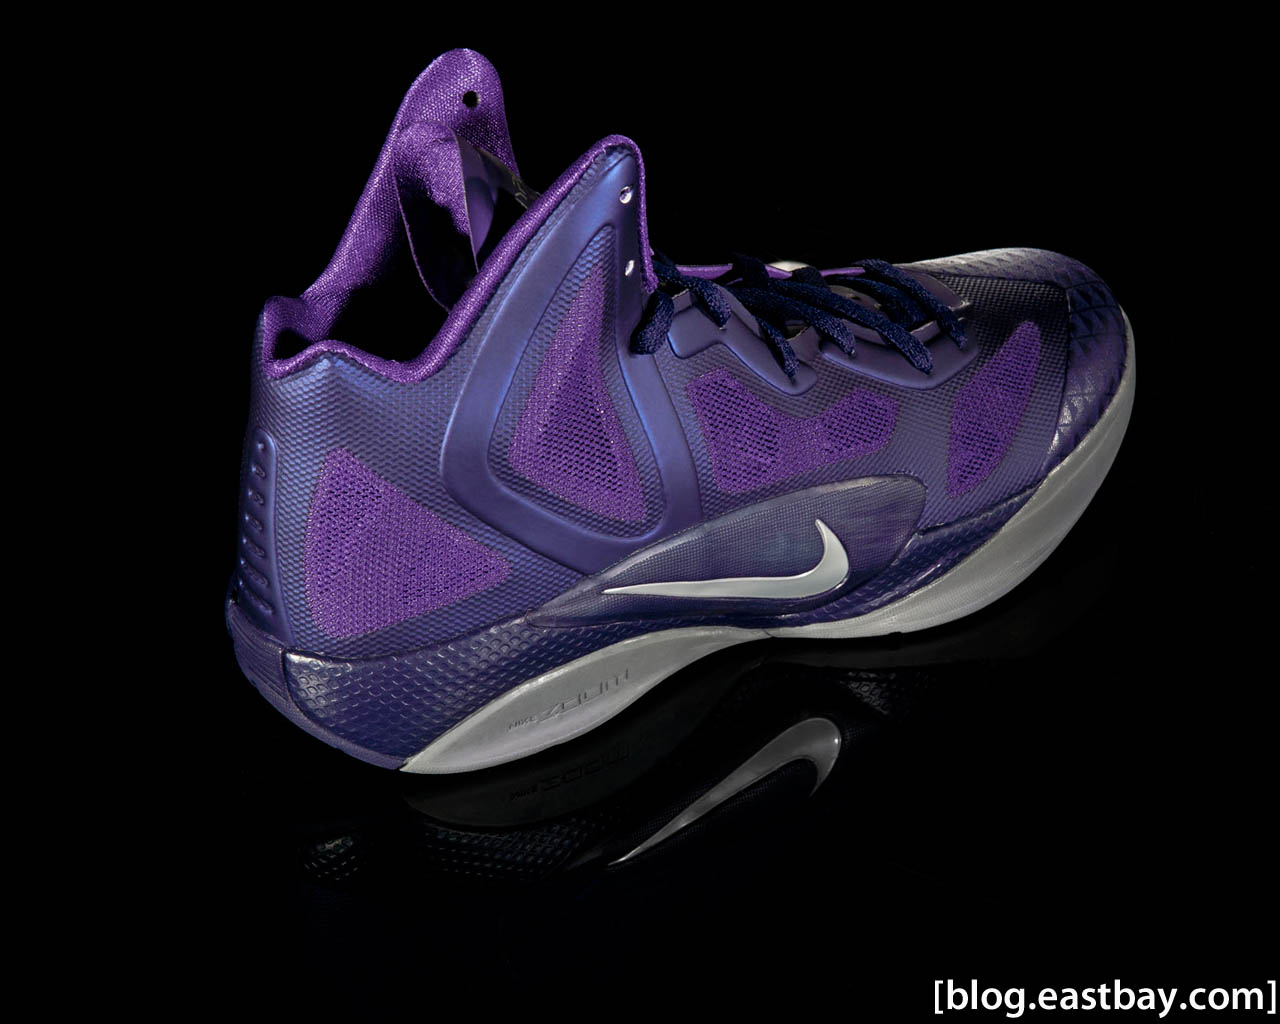 Wallpaper: Nike Zoom Hyperfuse 2011 Supreme Club Purple